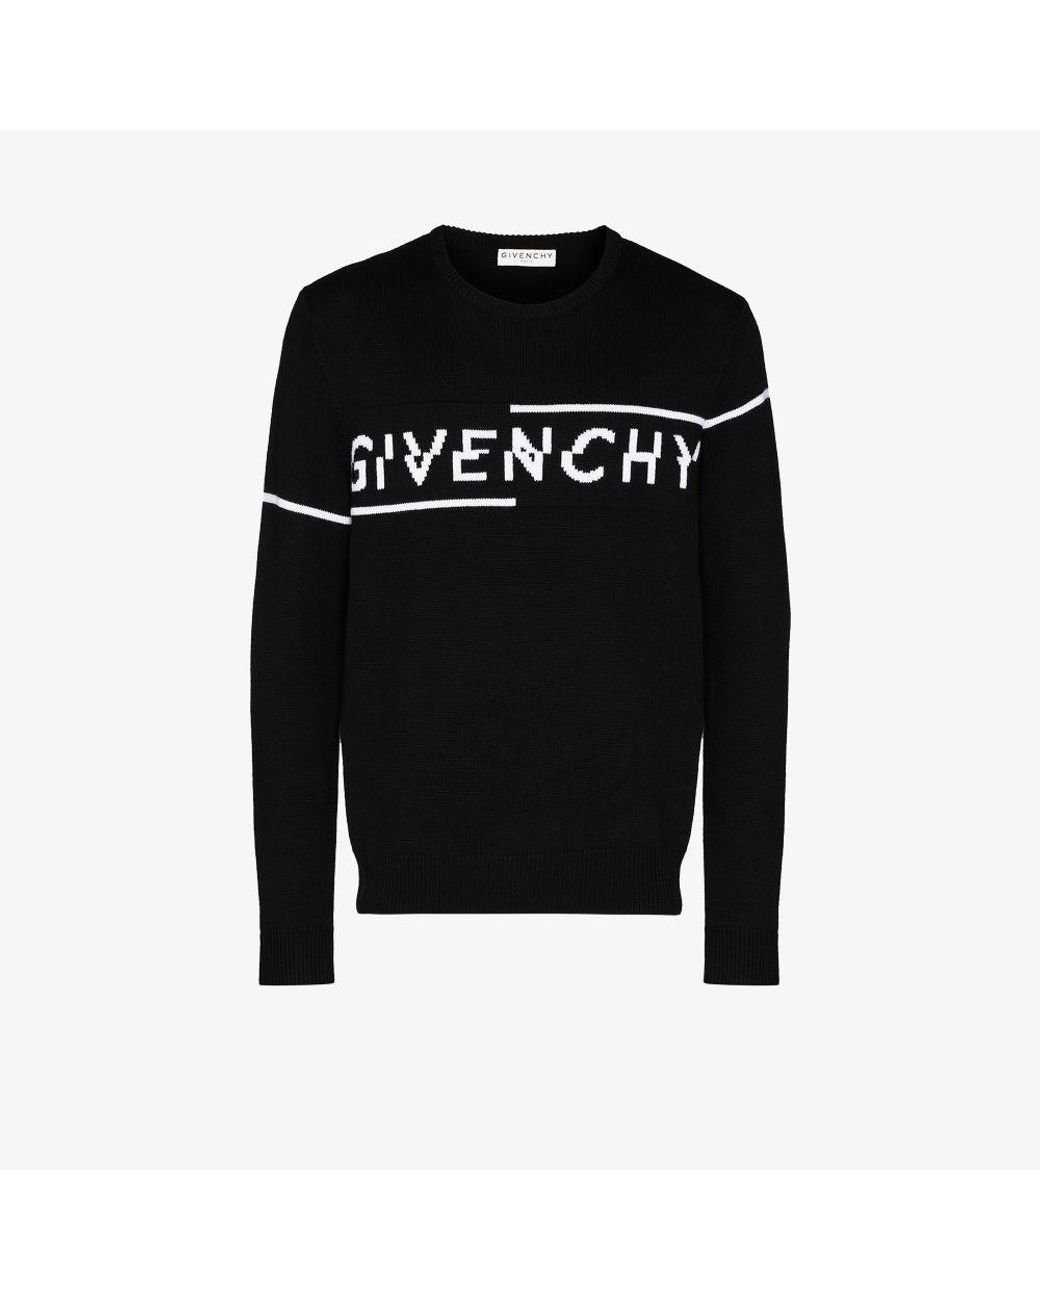 Givenchy Split Logo Wool Sweater in Black for Men - Lyst